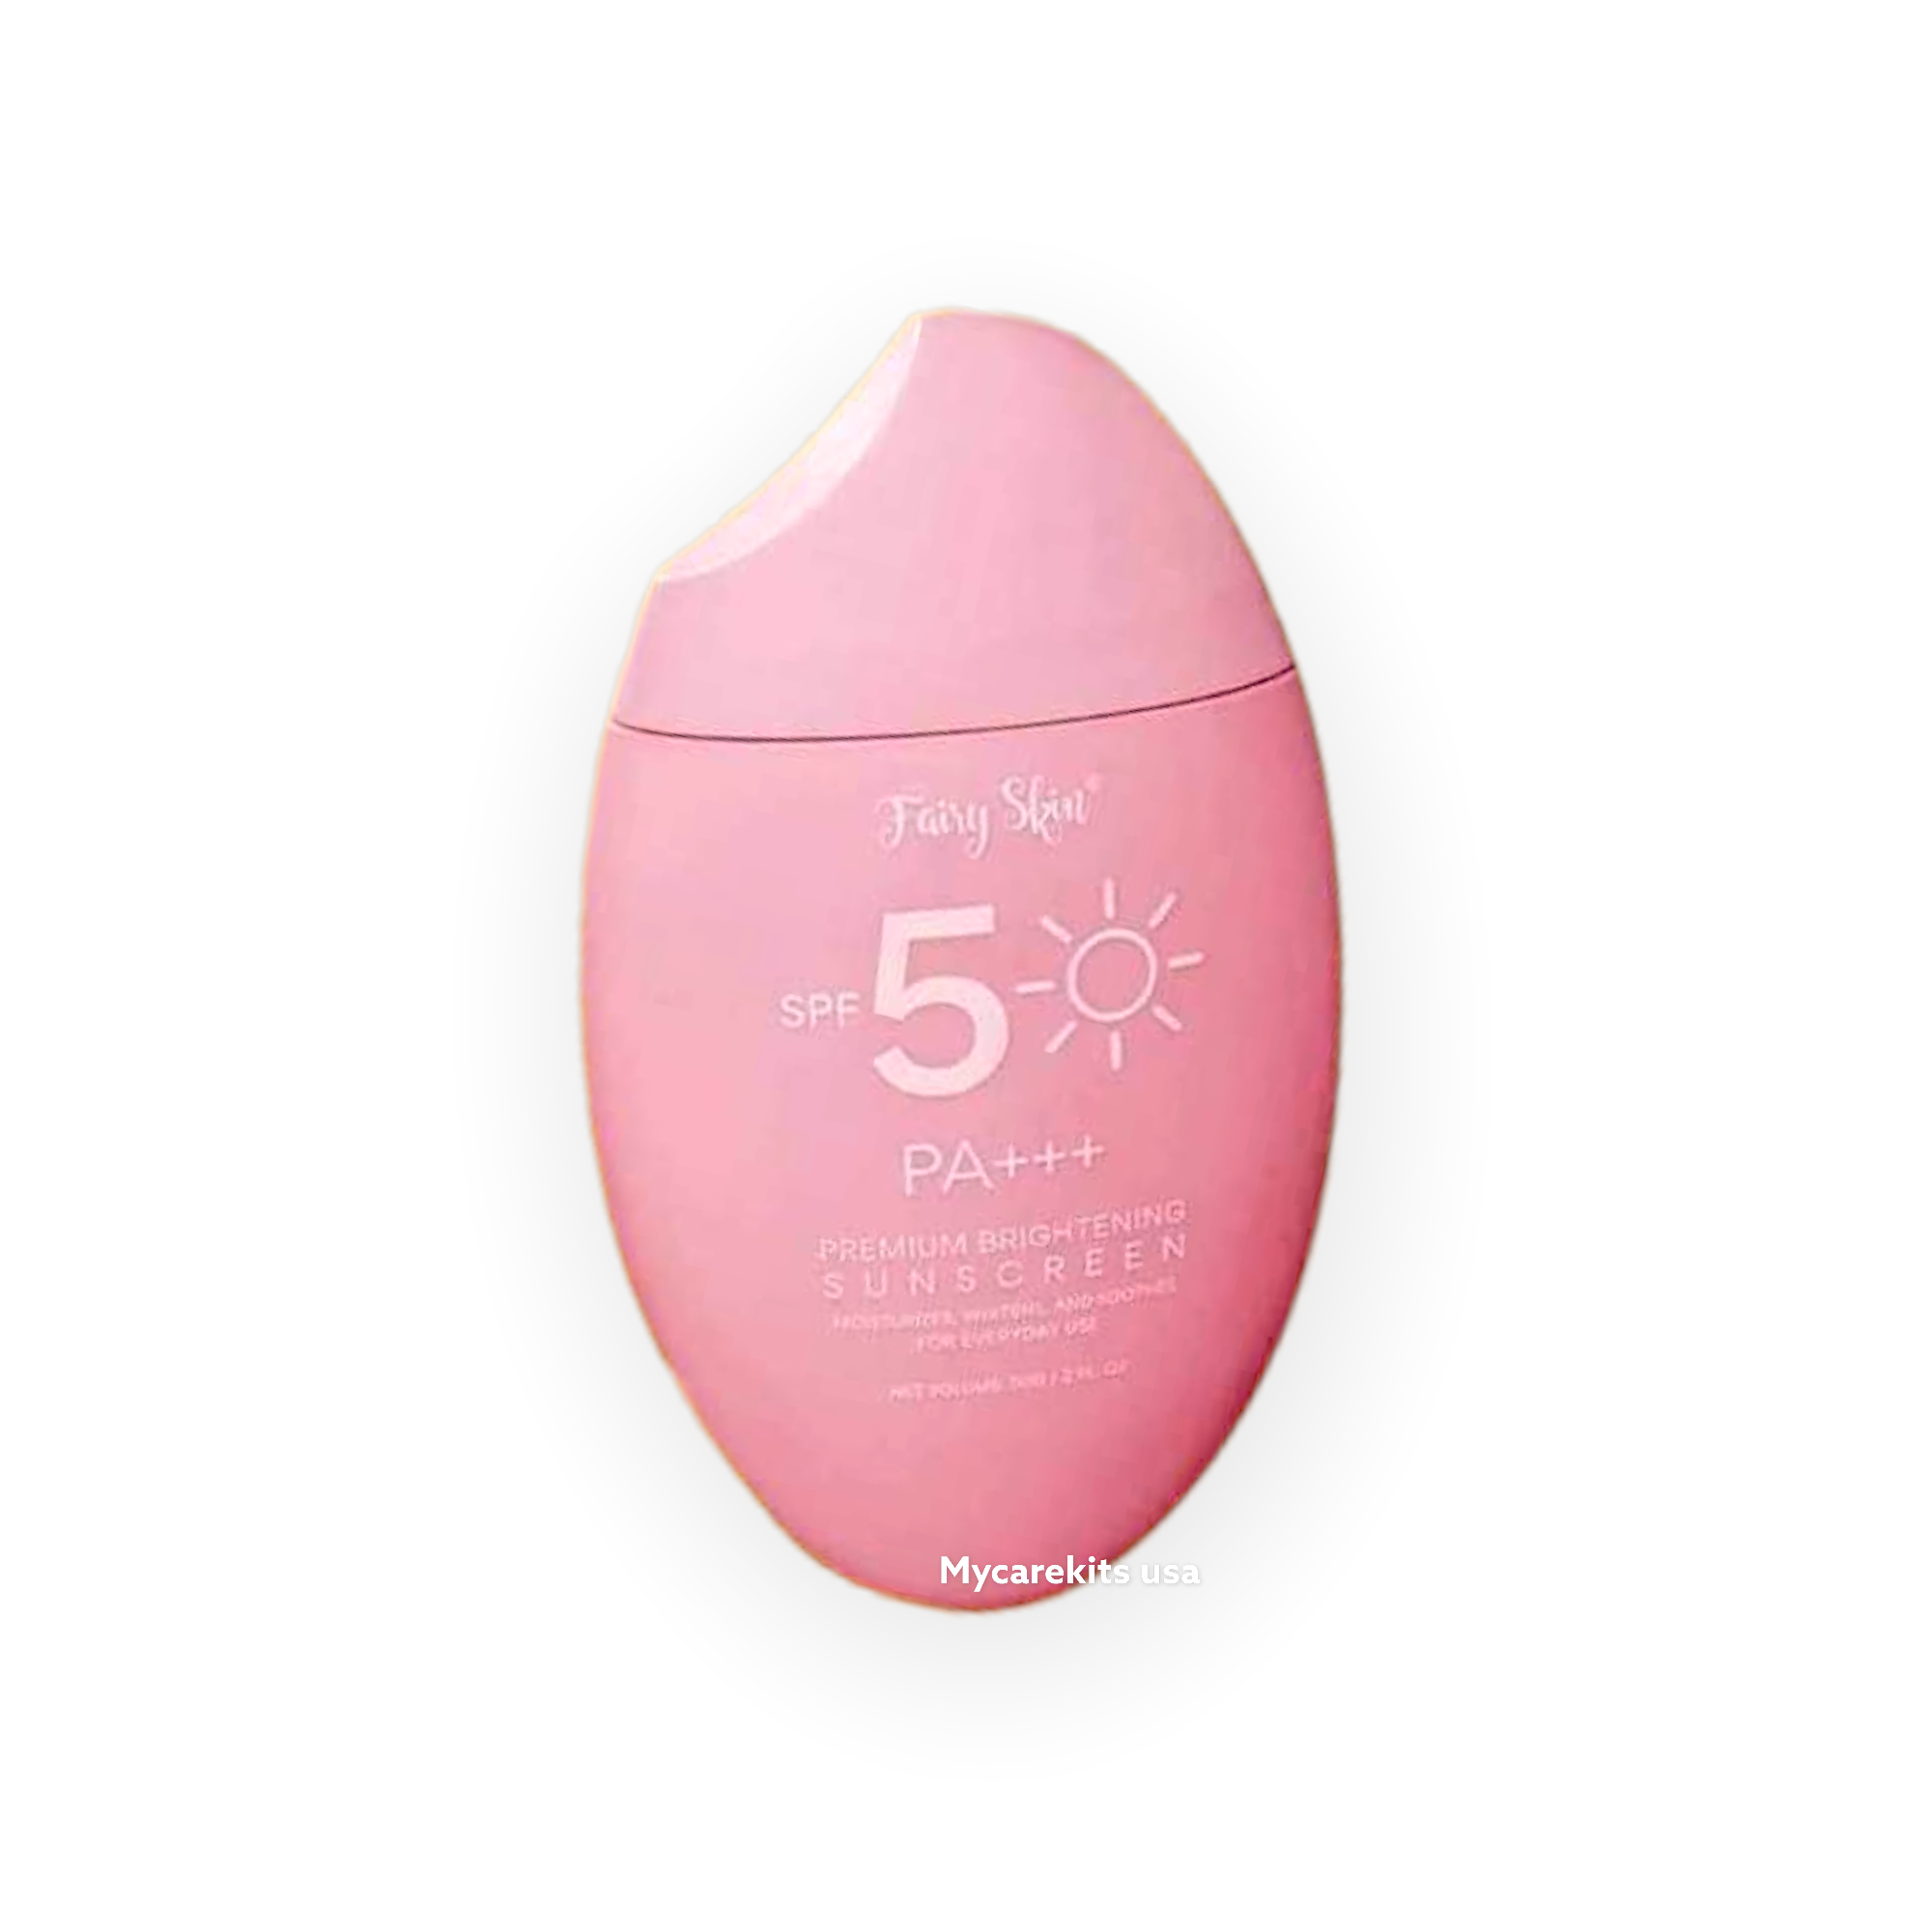 Fairy Skin Premium Brightening Sunscreen SPF 50 - 50g